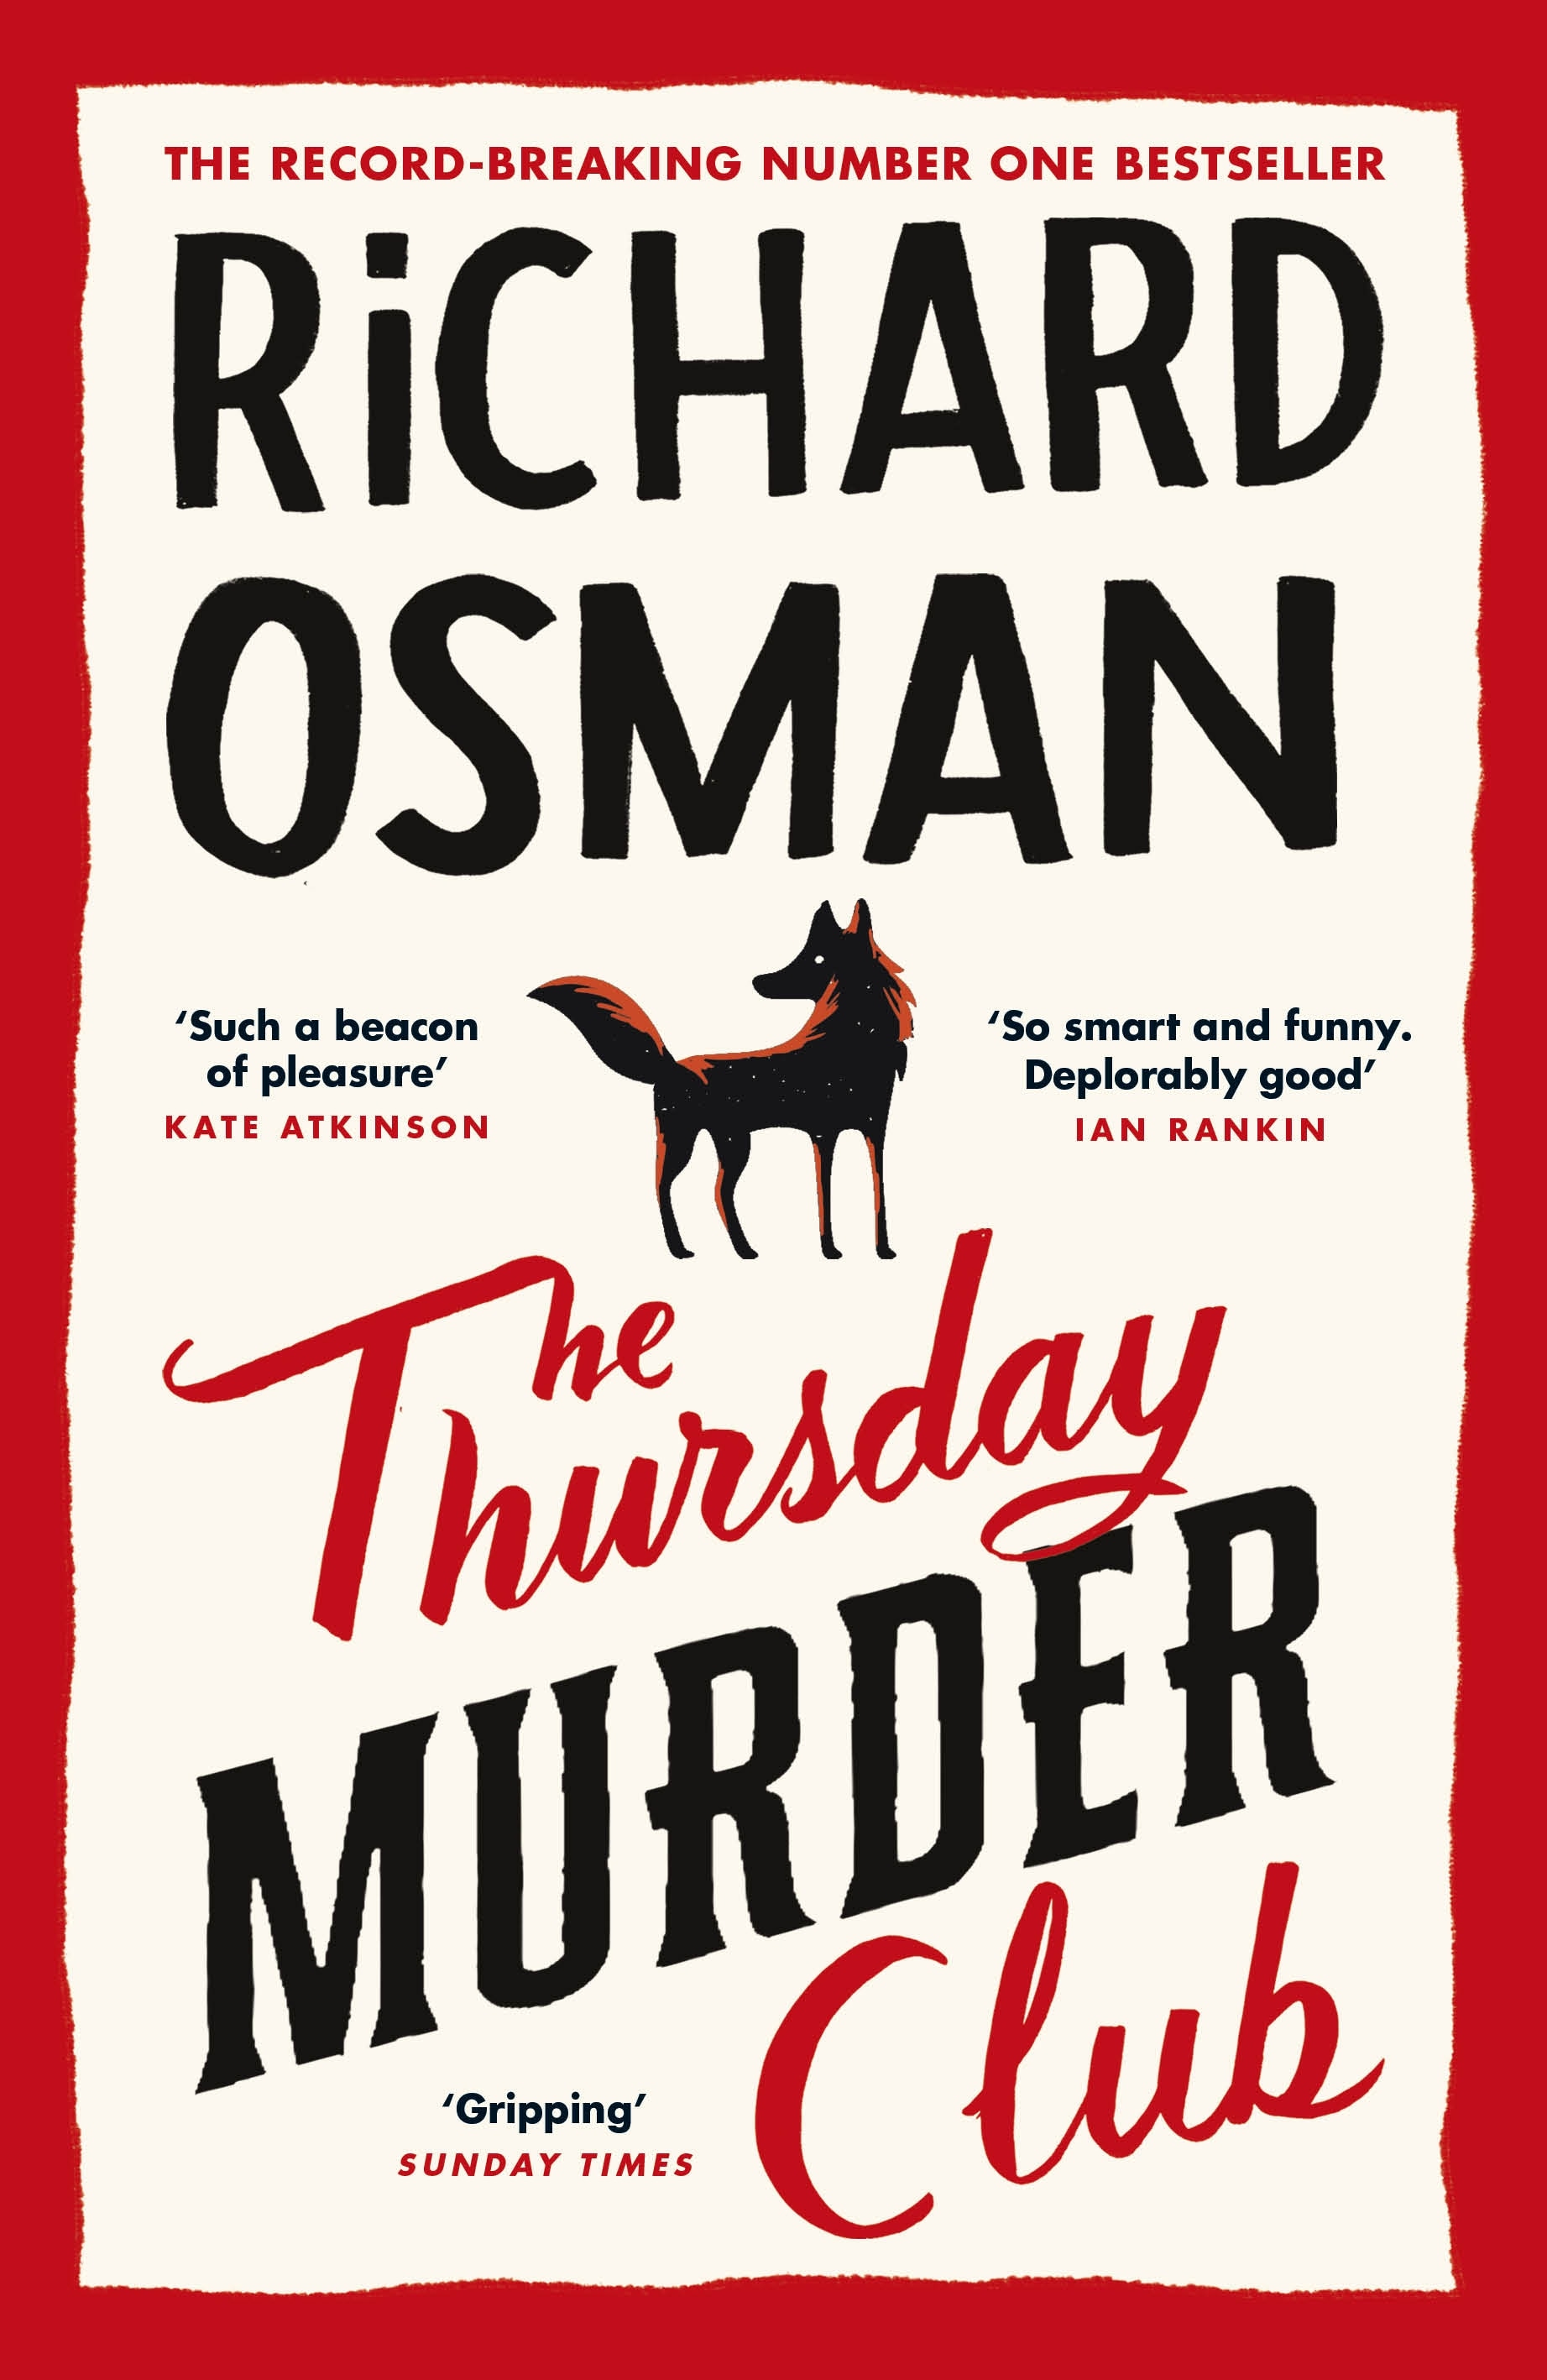 Book “The Thursday Murder Club” by Richard Osman — September 3, 2020